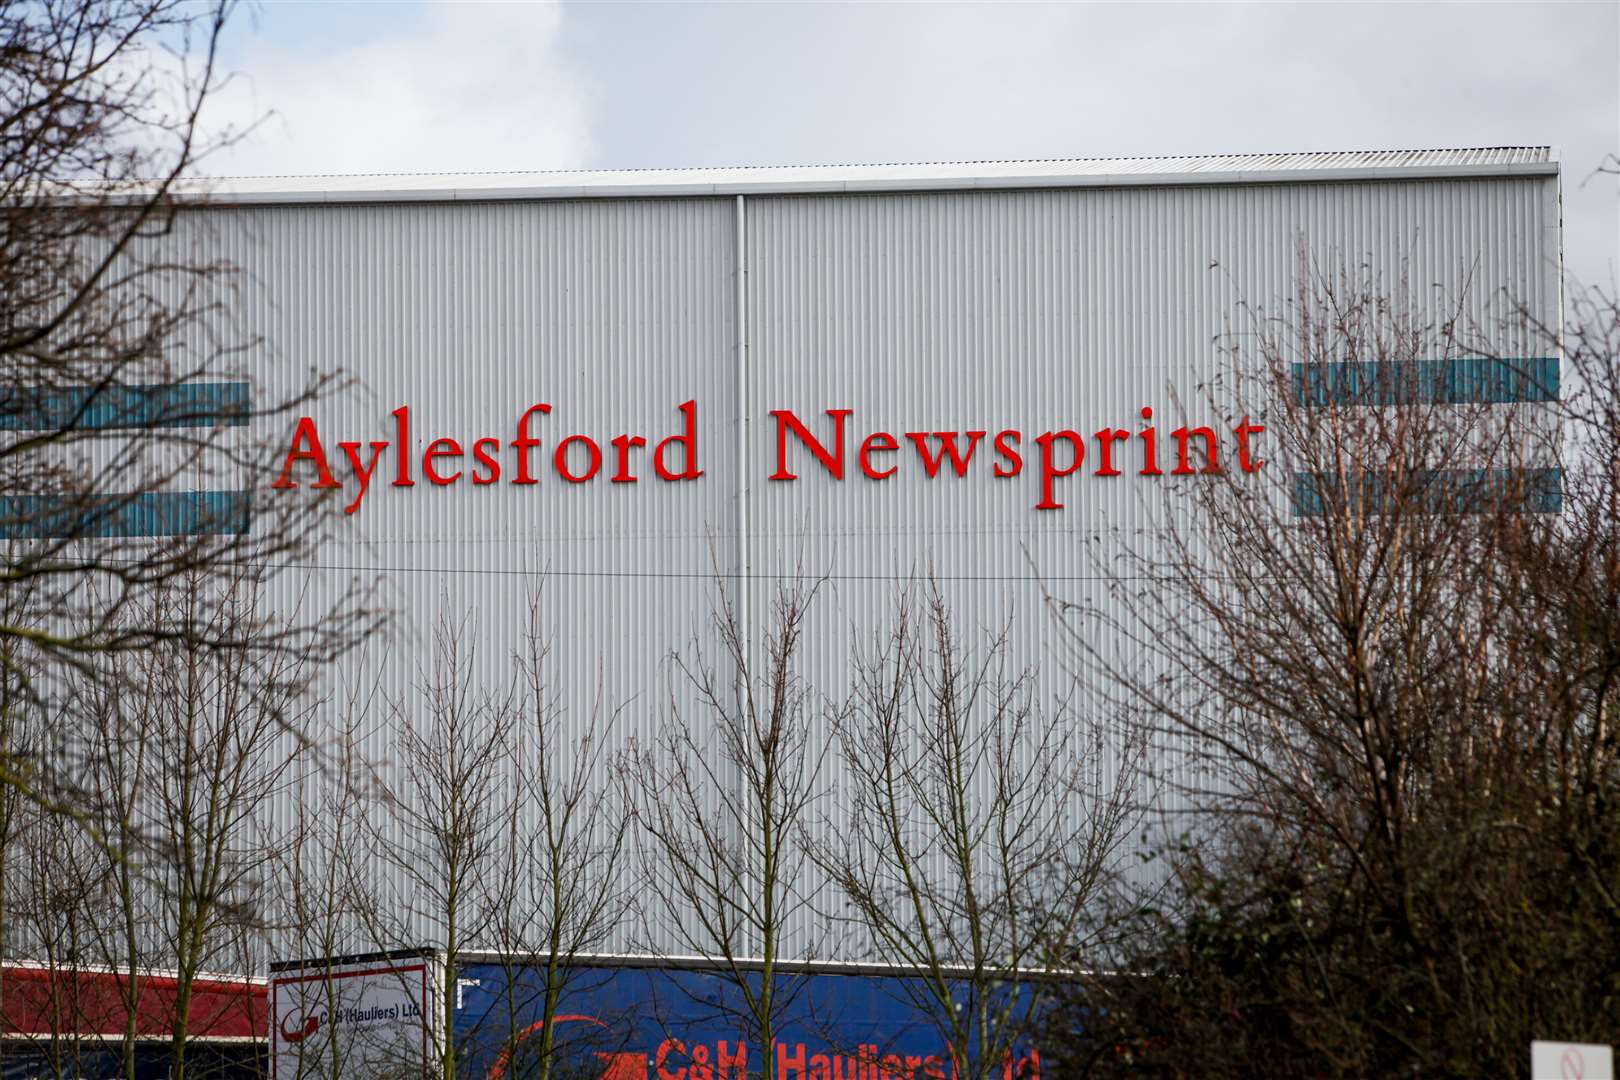 Aylesford Newsprint has closed costing 233 jobs so far